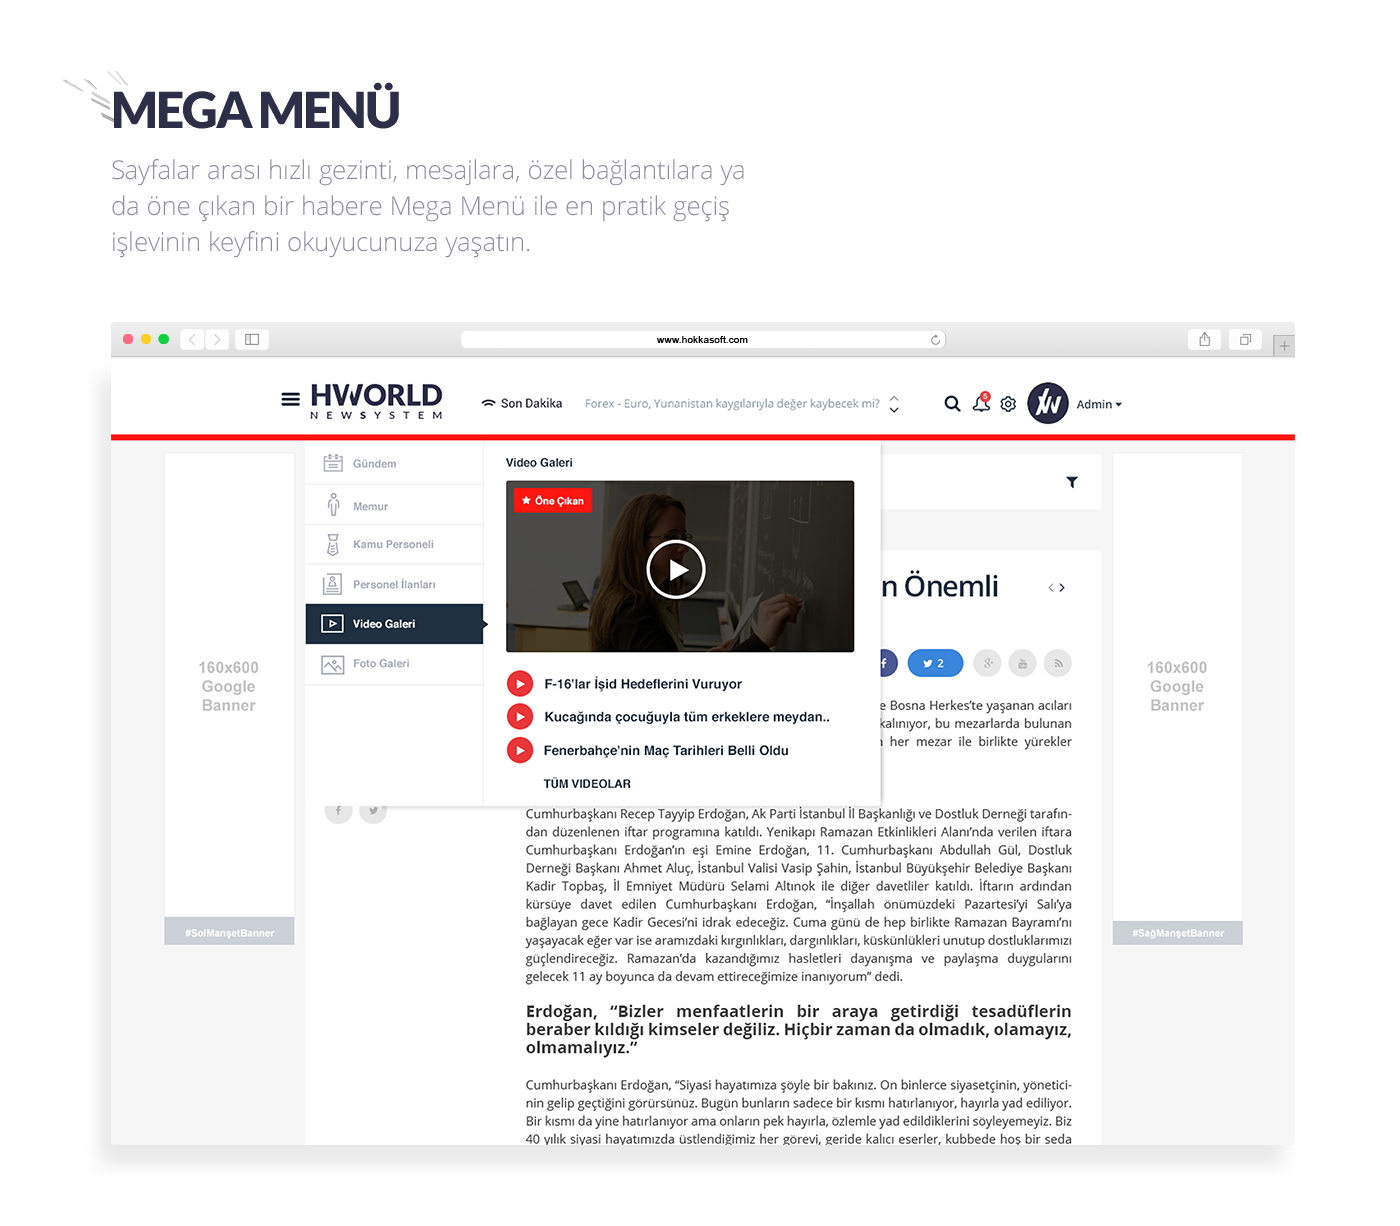 news portal news feed Website Webdesign dashboard admin panel Content Management mobile